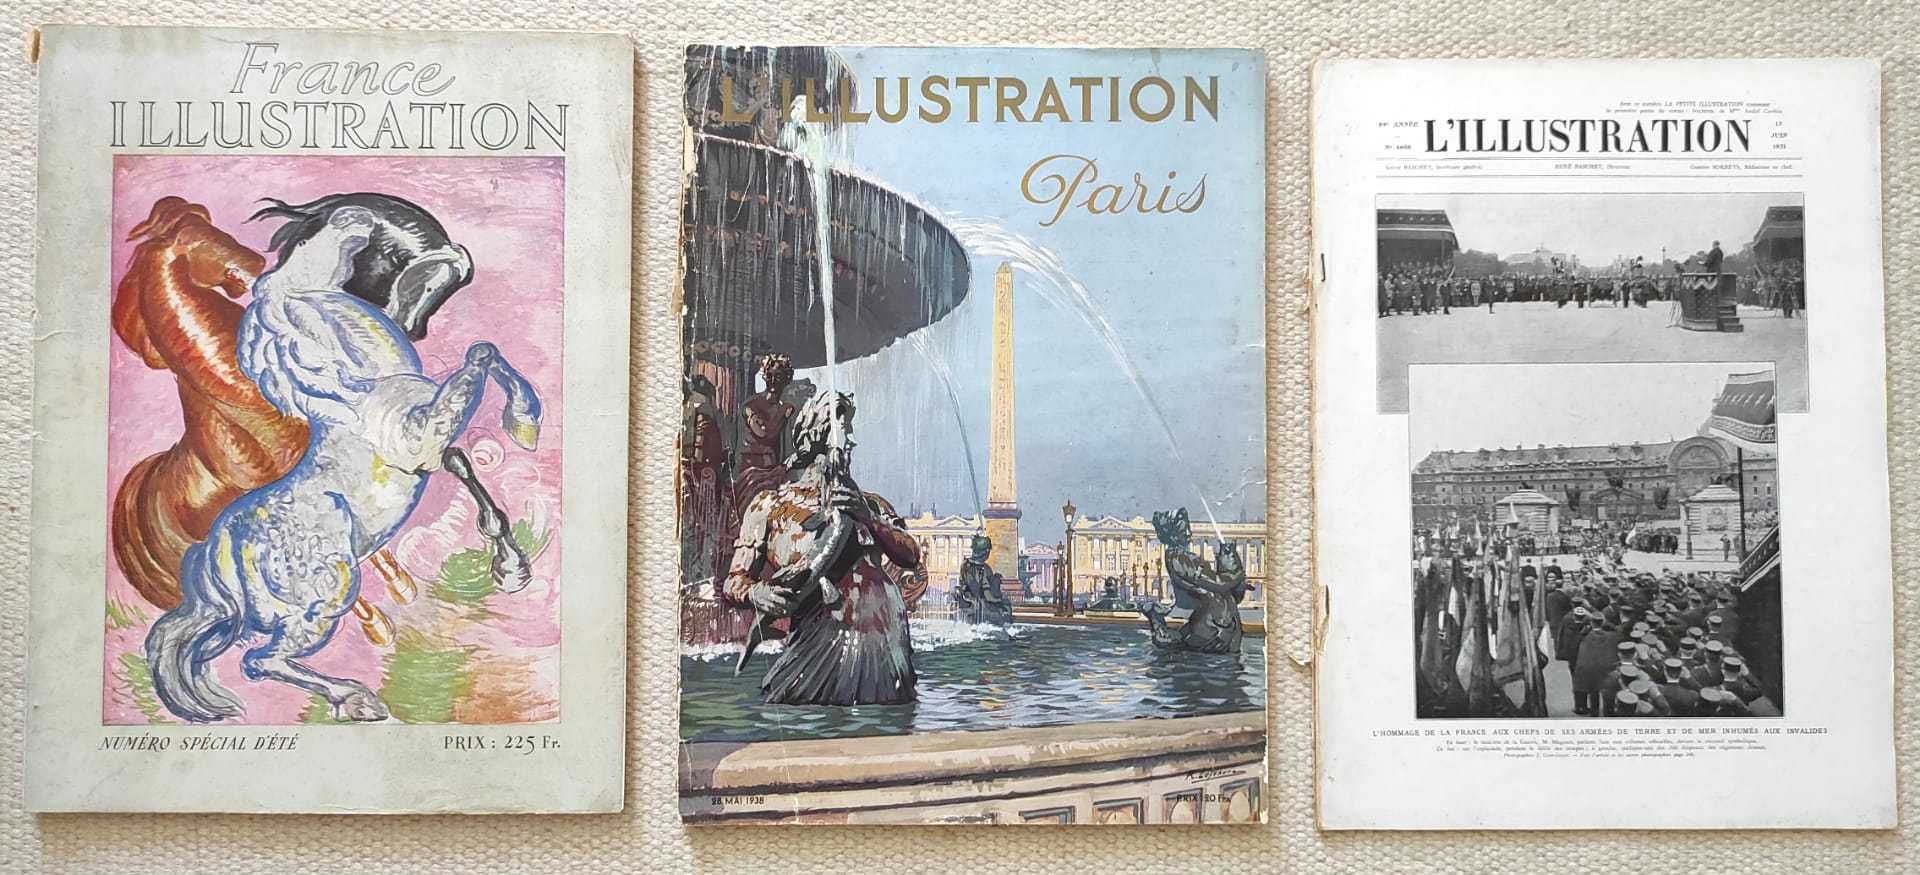 Revista L’Illustration, diversas edições entre 1908 e 1947